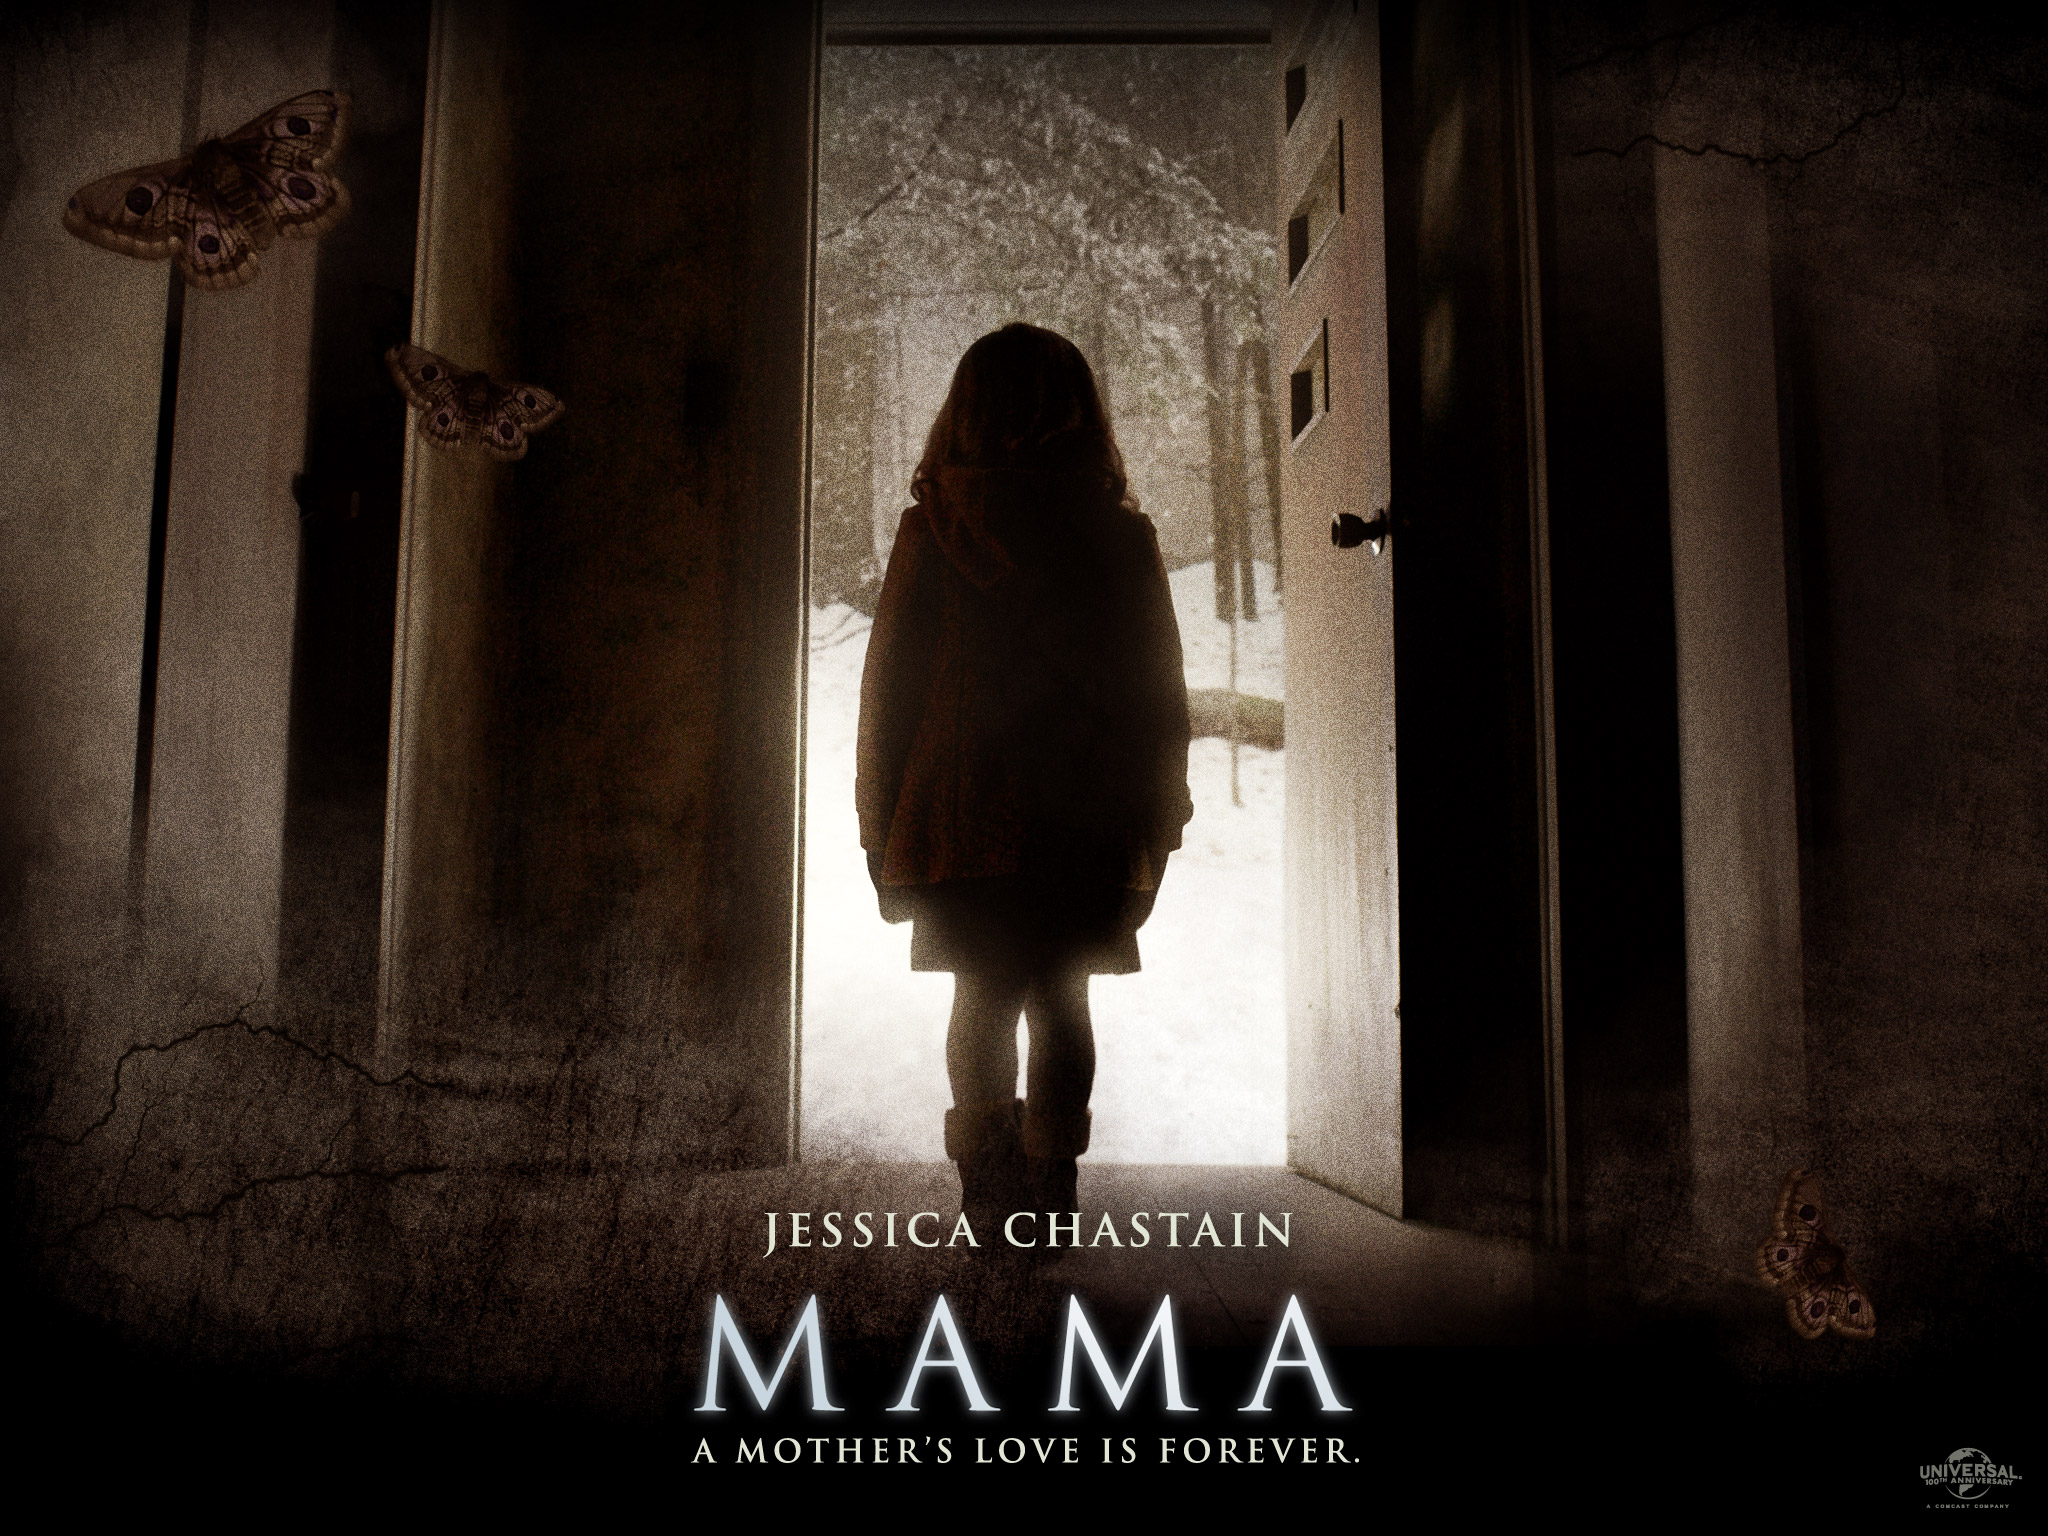 Mama (2013 film) - Wikipedia